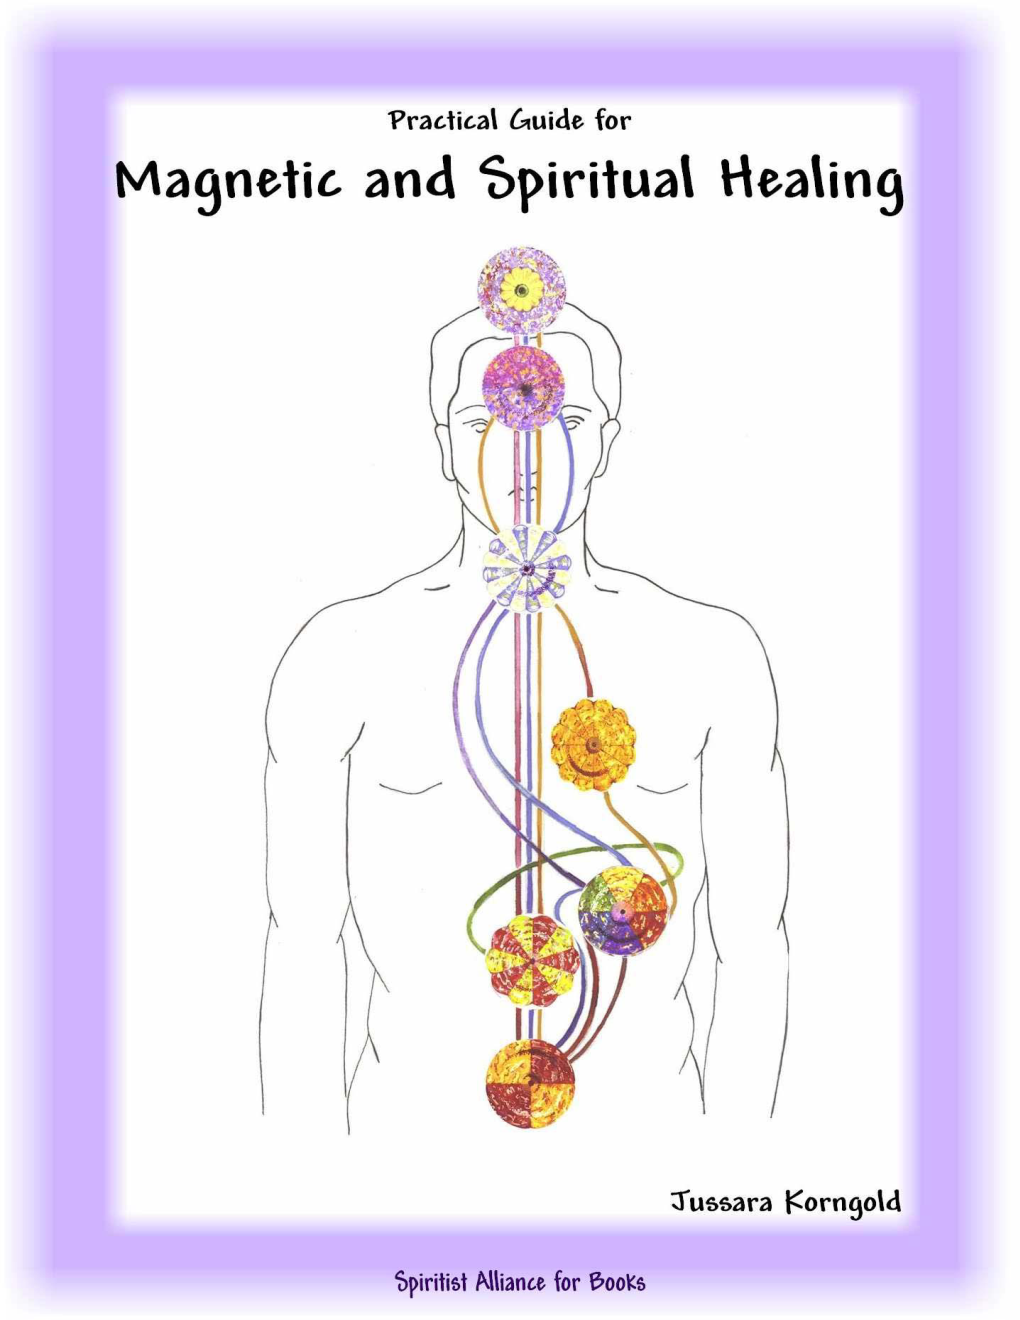 Magnetic and Spiritual Healing